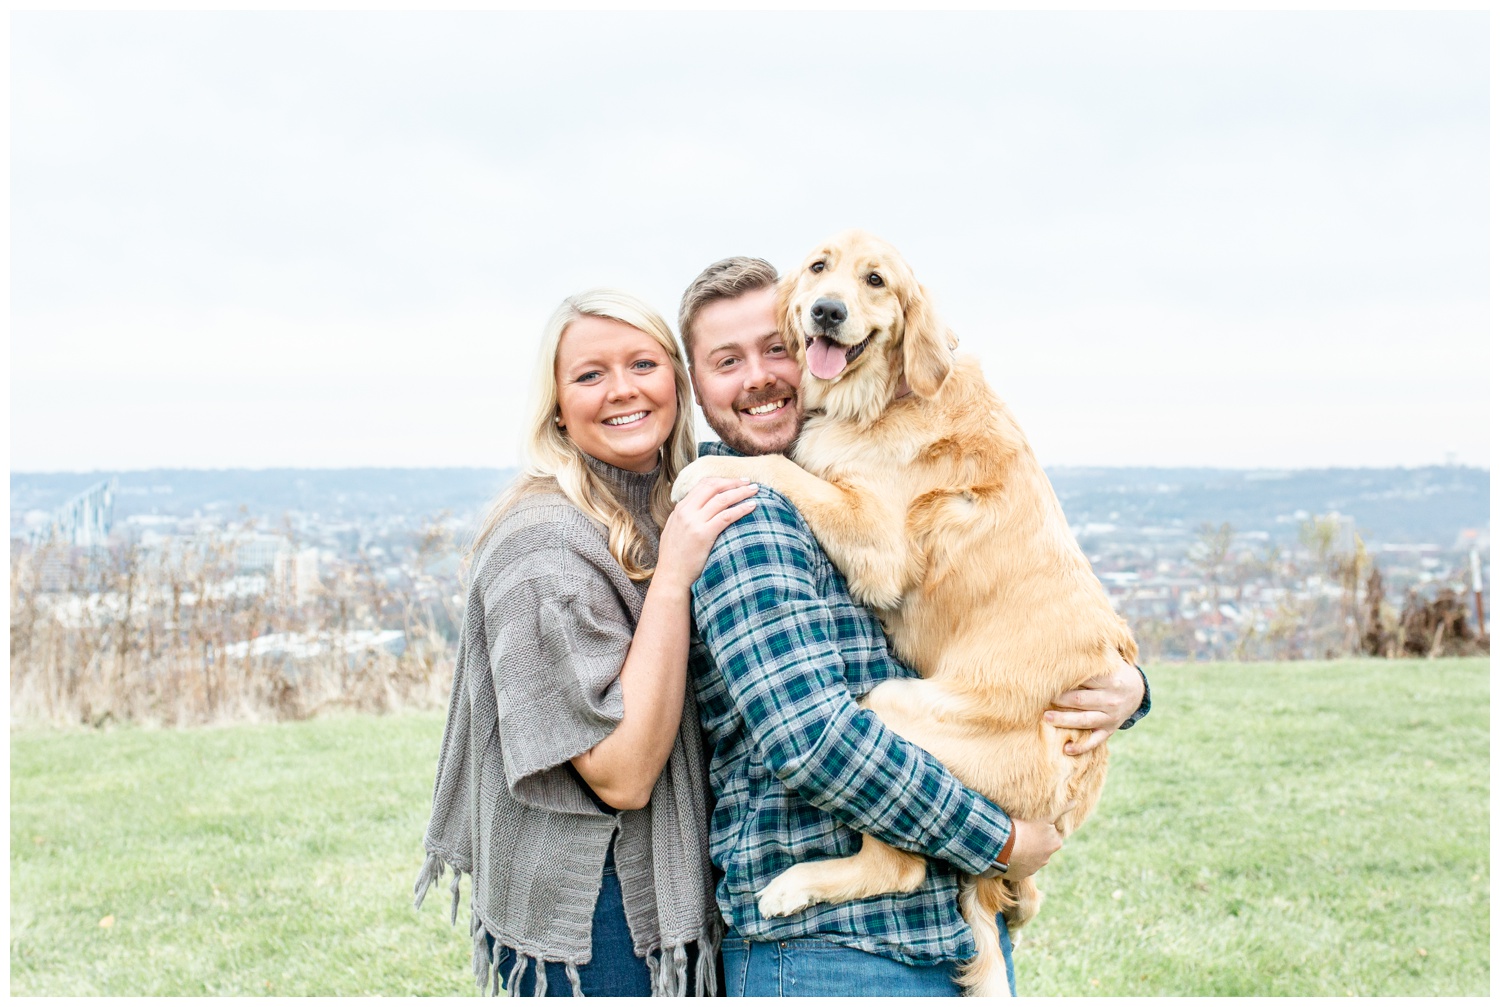 Engagement Pictures with Dog - Cincinnati Wedding at Devou Park